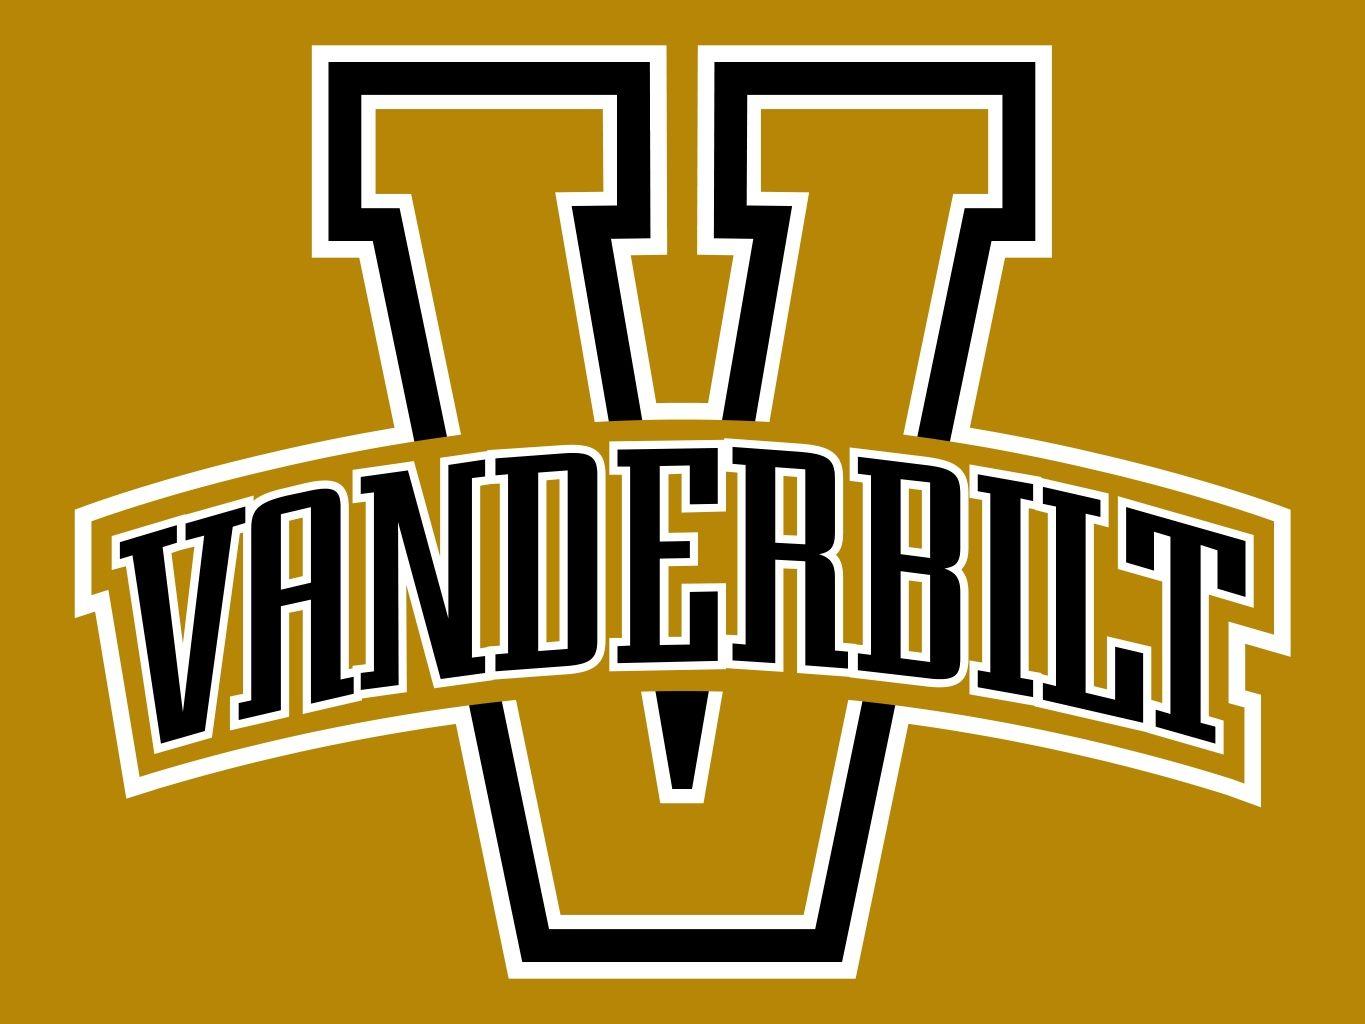 Vanderbilt University Logo - Vanderbilt University is a private research university located in ...